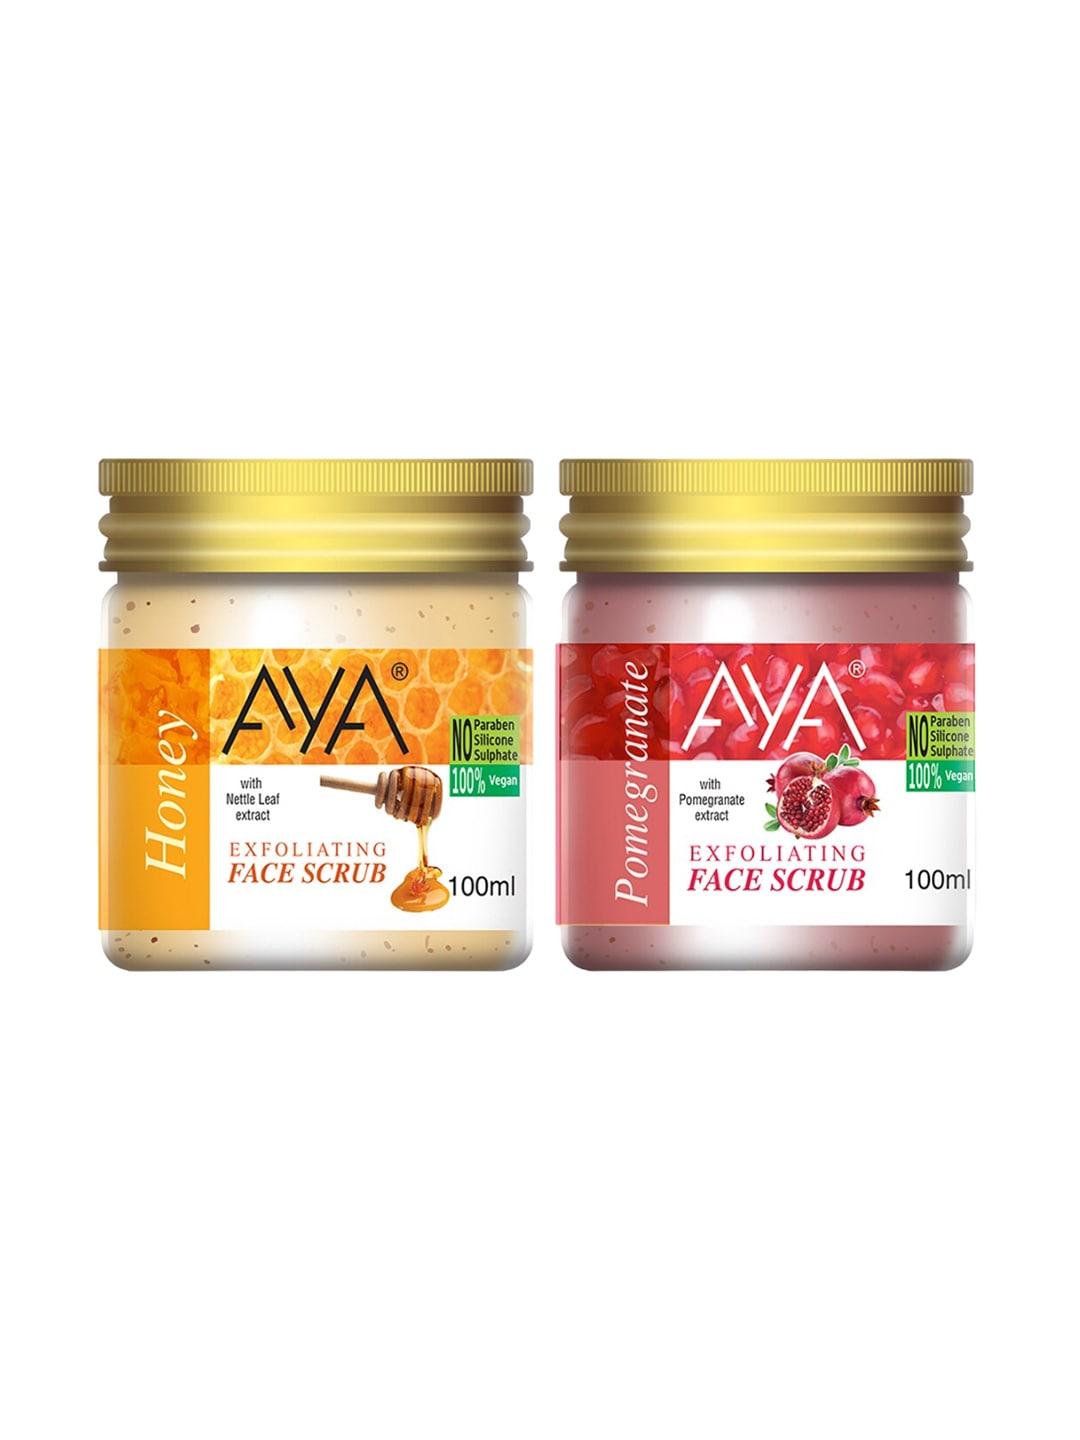 aya set of 2 honey & pomegranate exfoliating face scrubs - 100 ml each